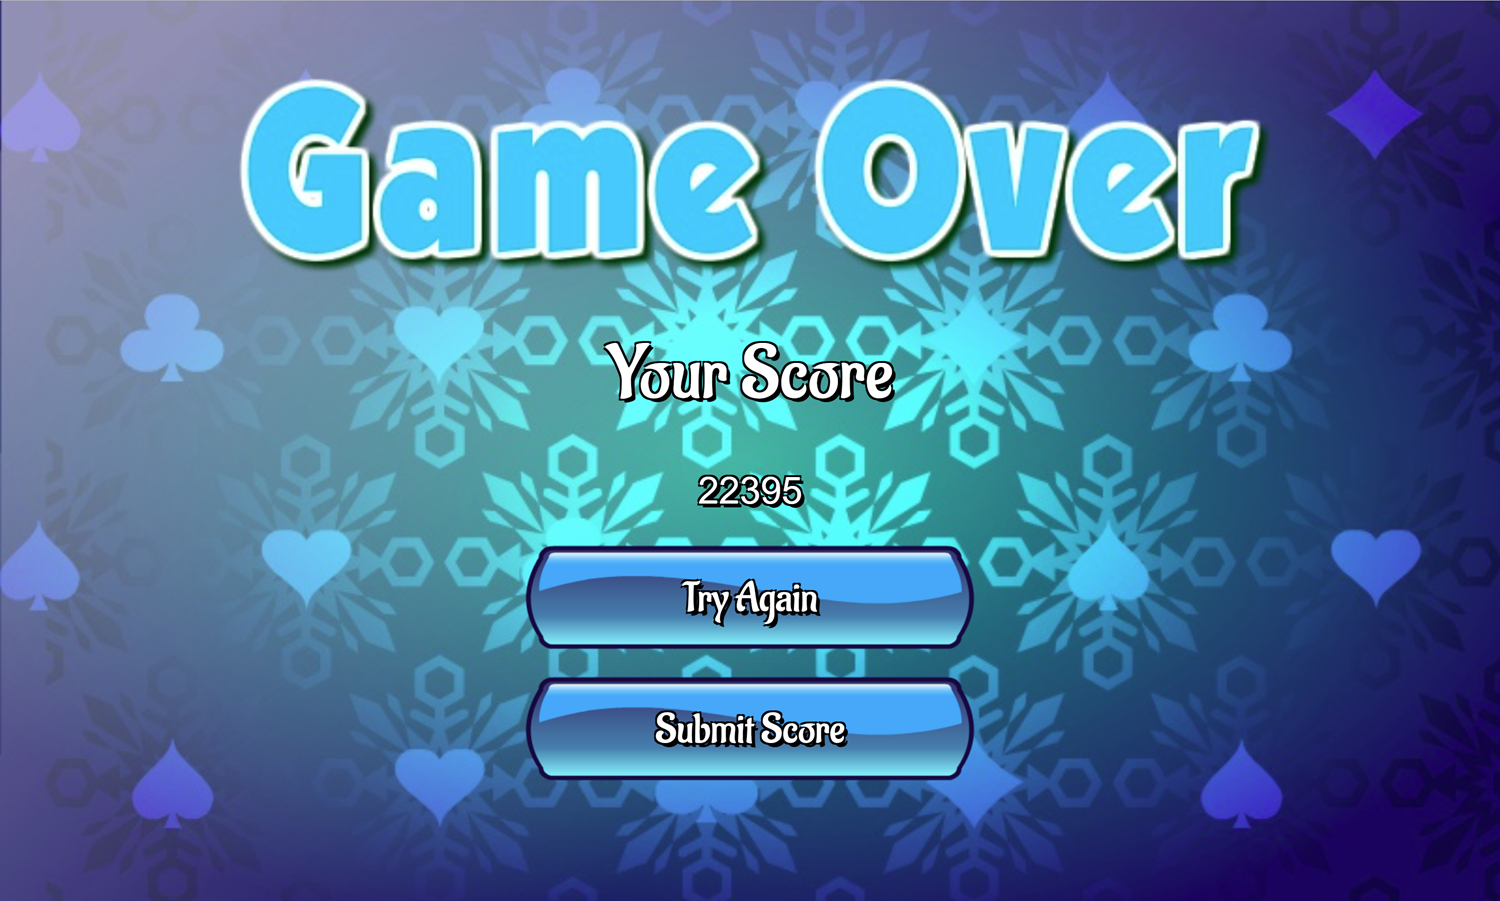 Baker's Game Game Over Screen Screenshot.